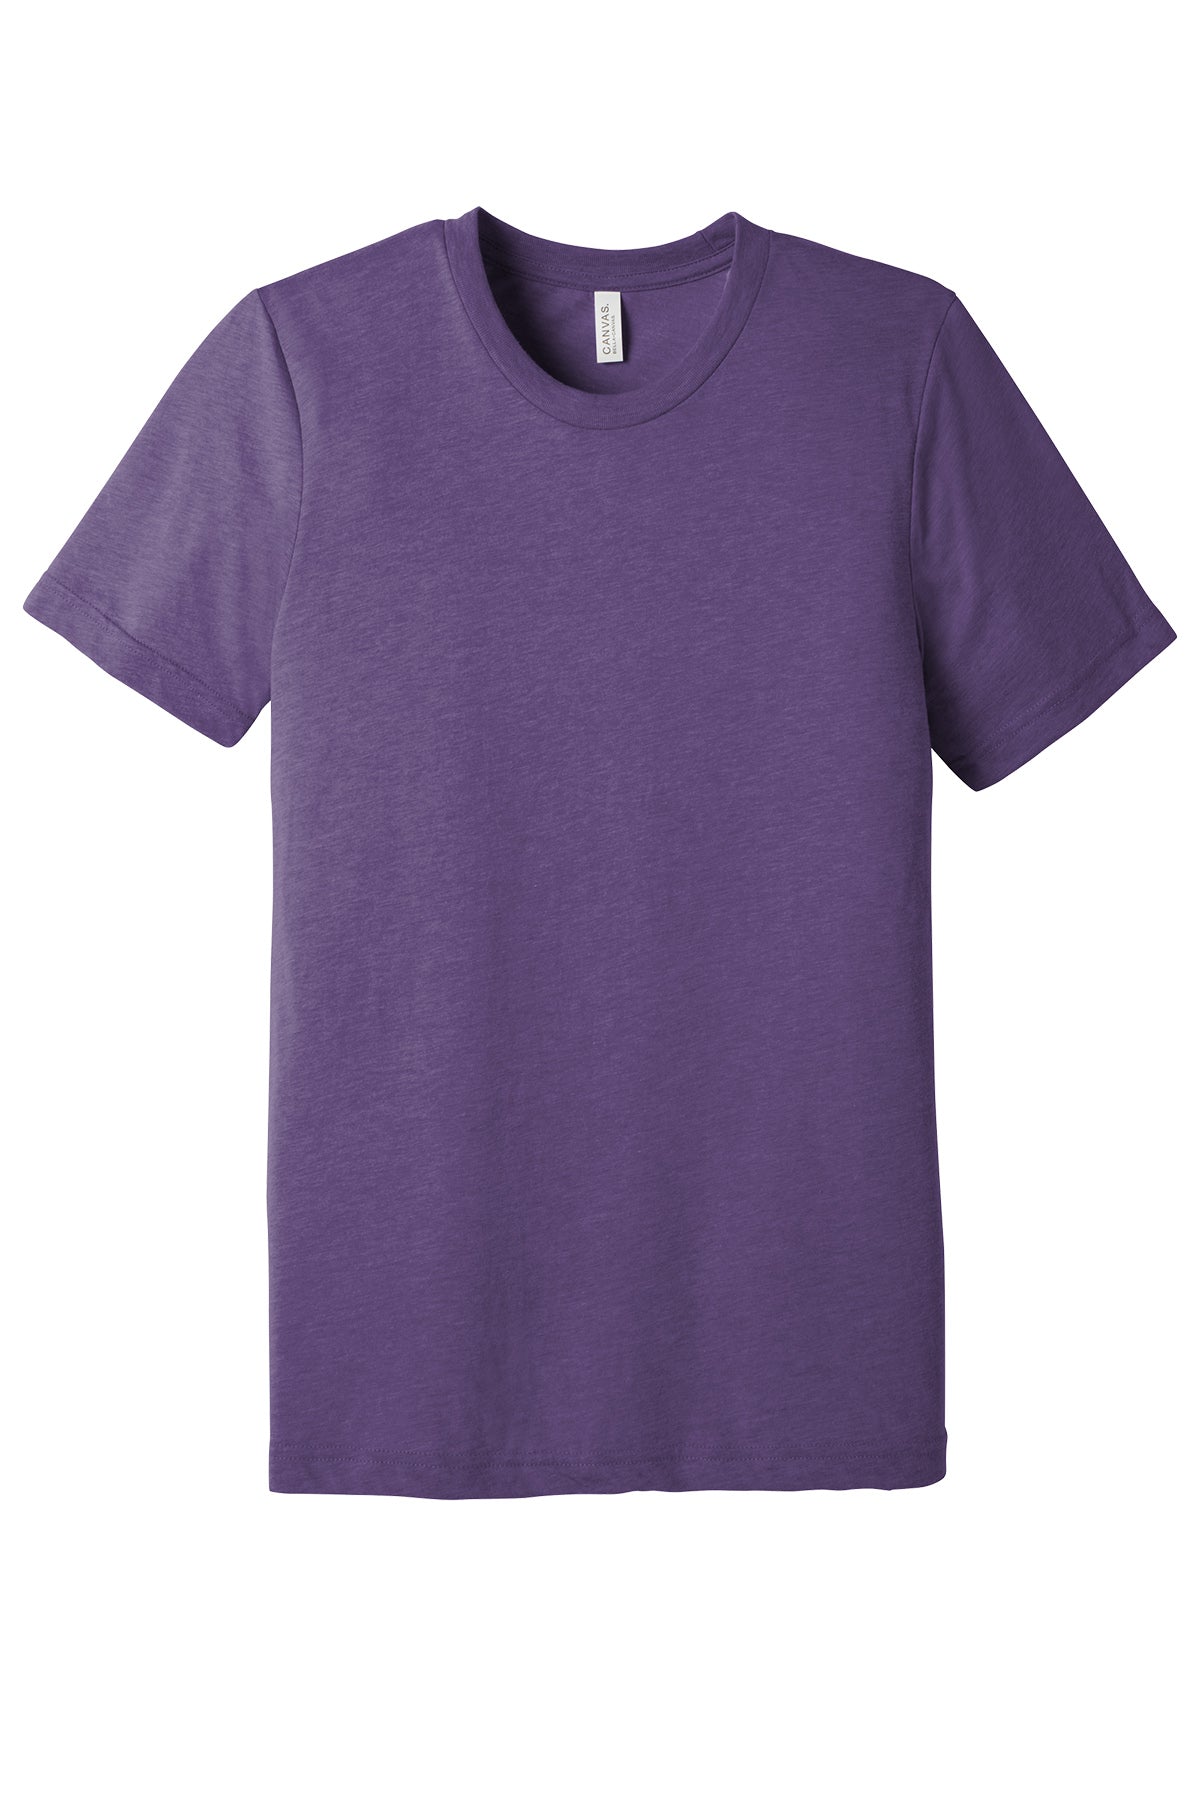 Bella+Canvas Bc3413 Adult T-Shirt Ad Small / Purple Triblend